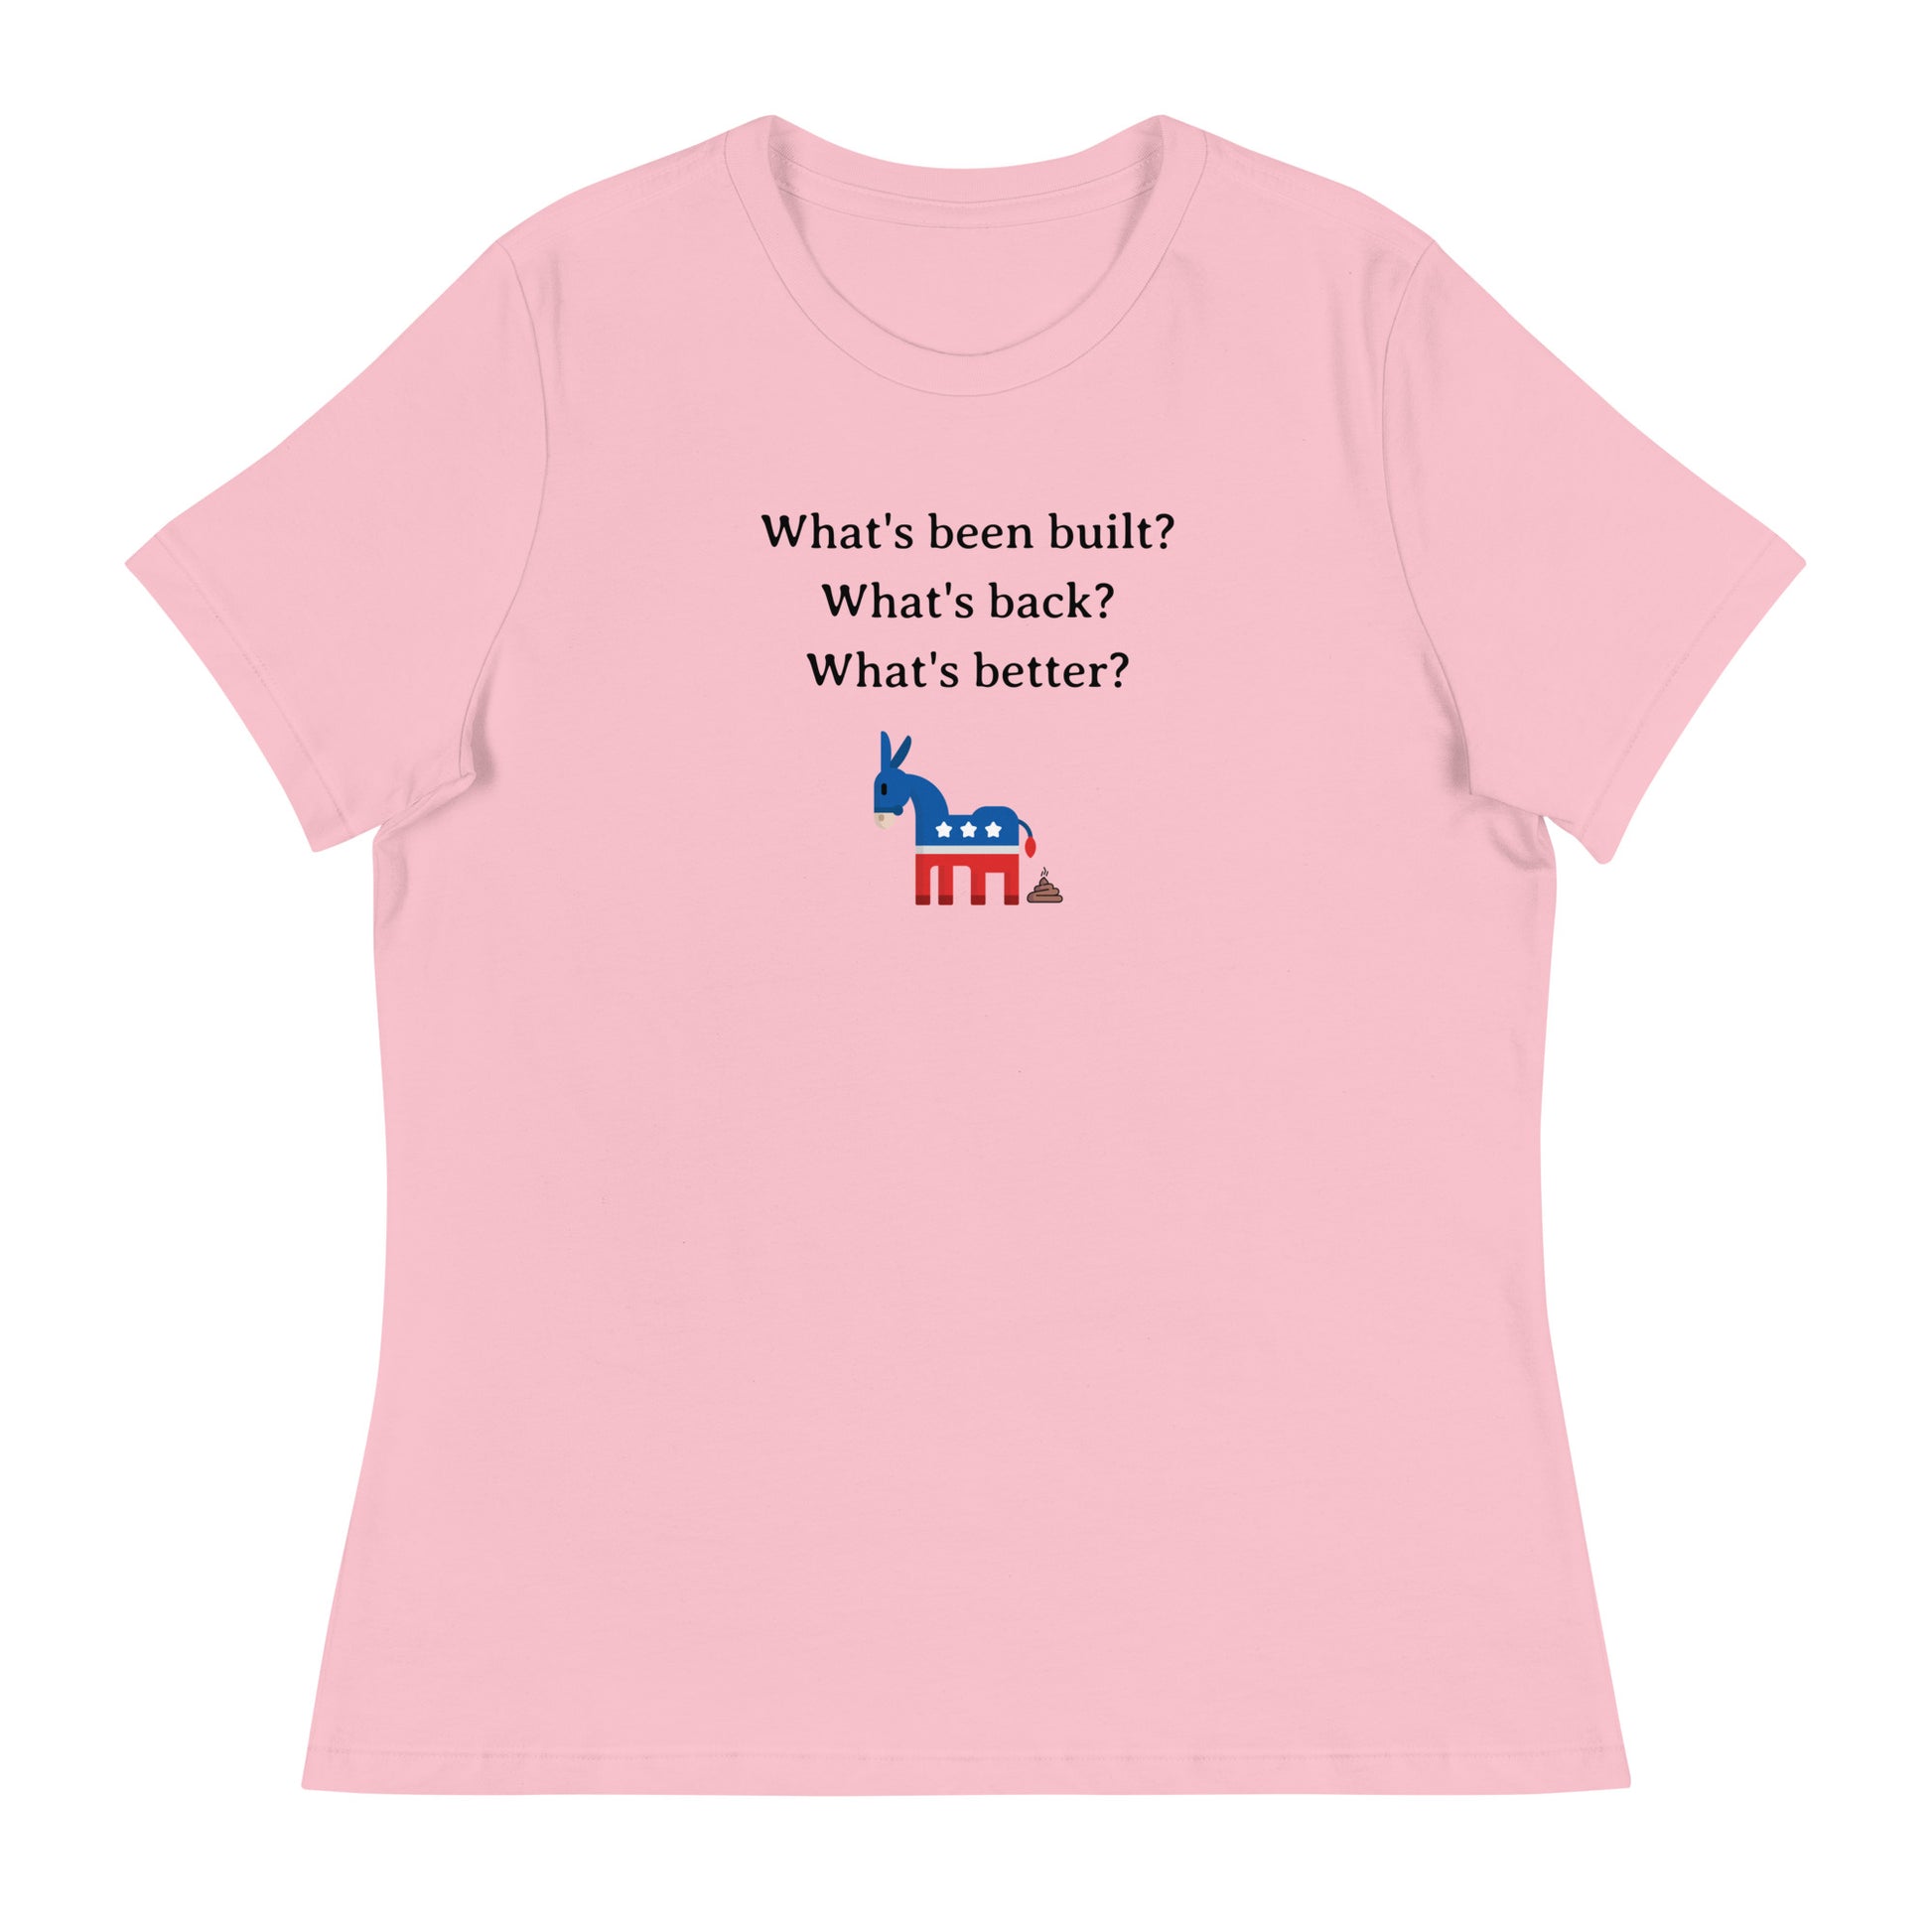 Liberal Lies Women's Relaxed Graphic T-Shirt Pink